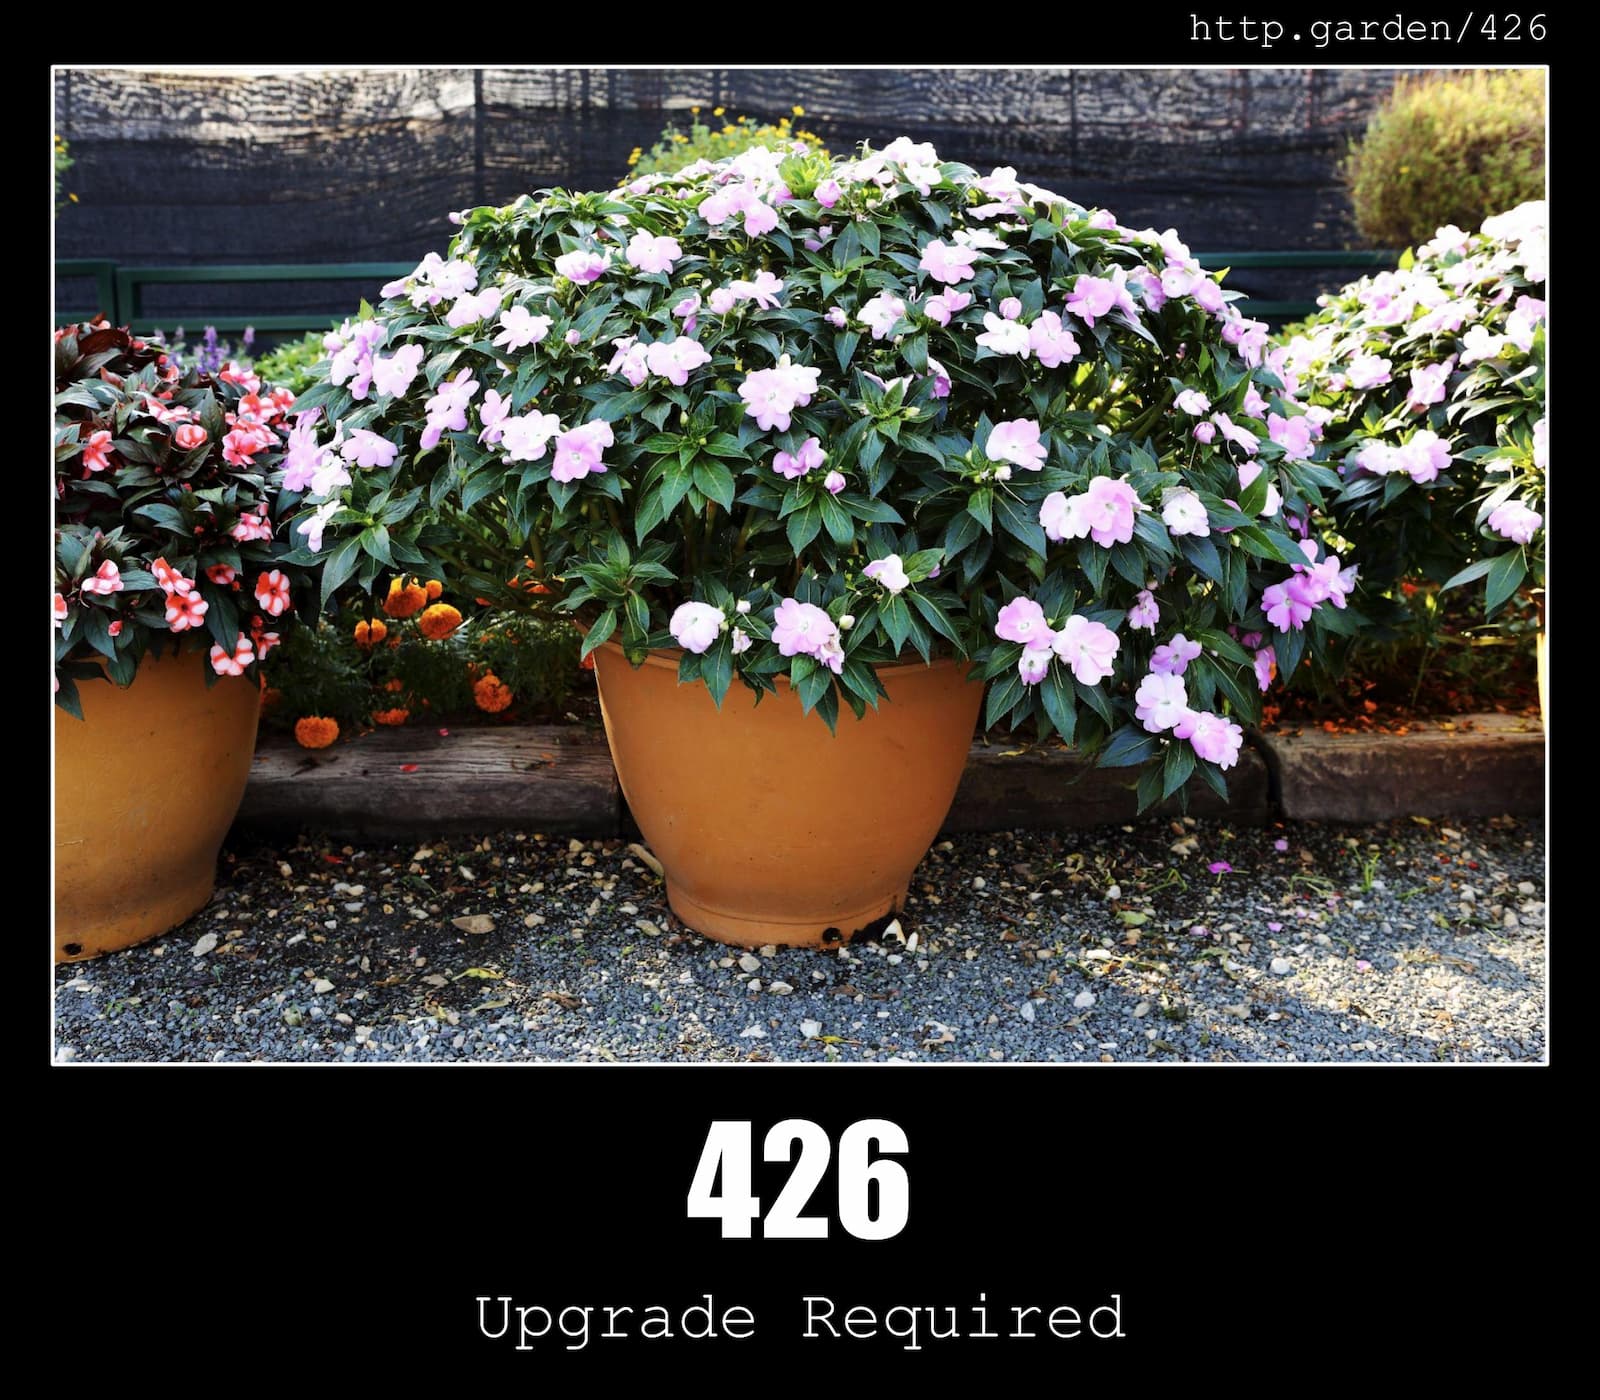 HTTP Status Code 426 Upgrade Required